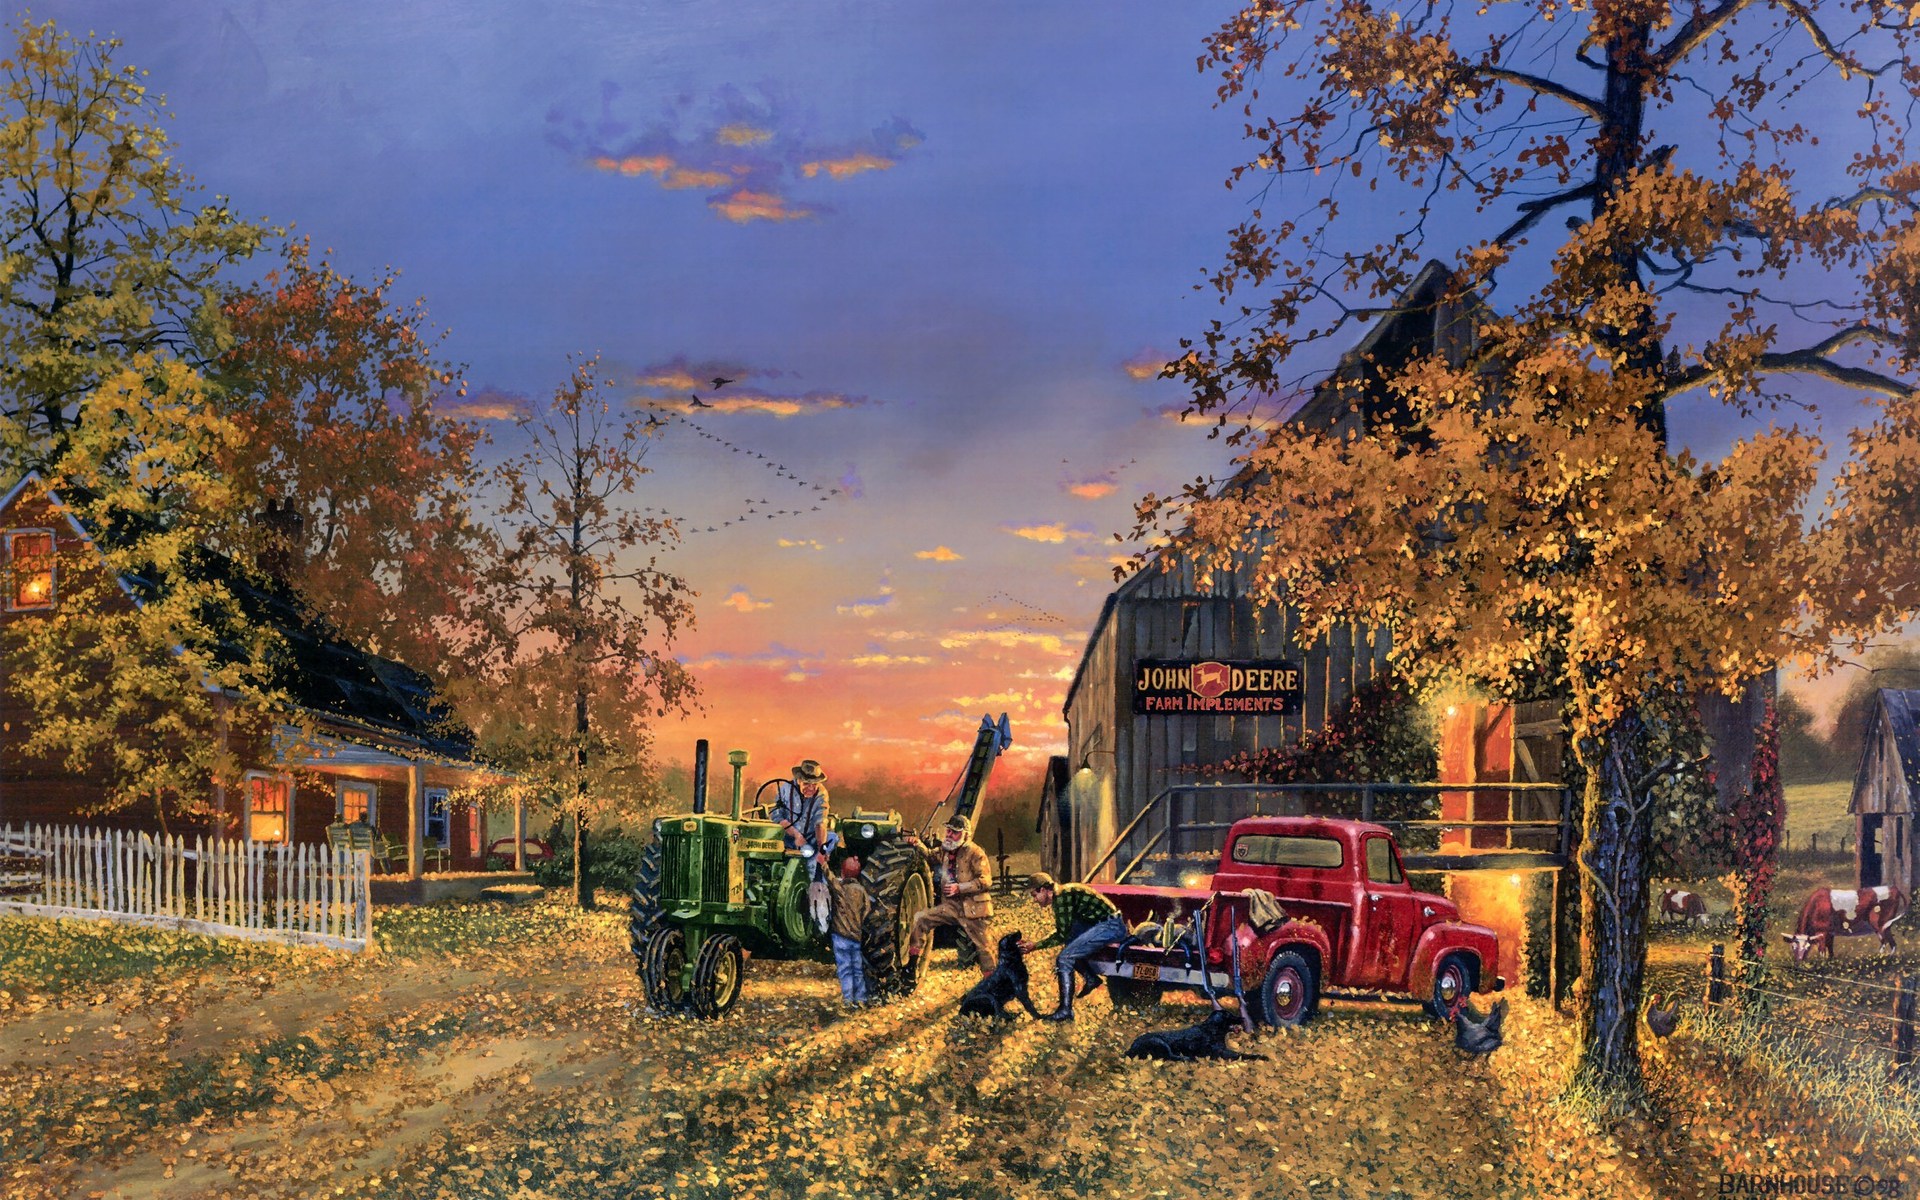  Barnhouse Barnhouse paintings country artistic farm vehicles tractor